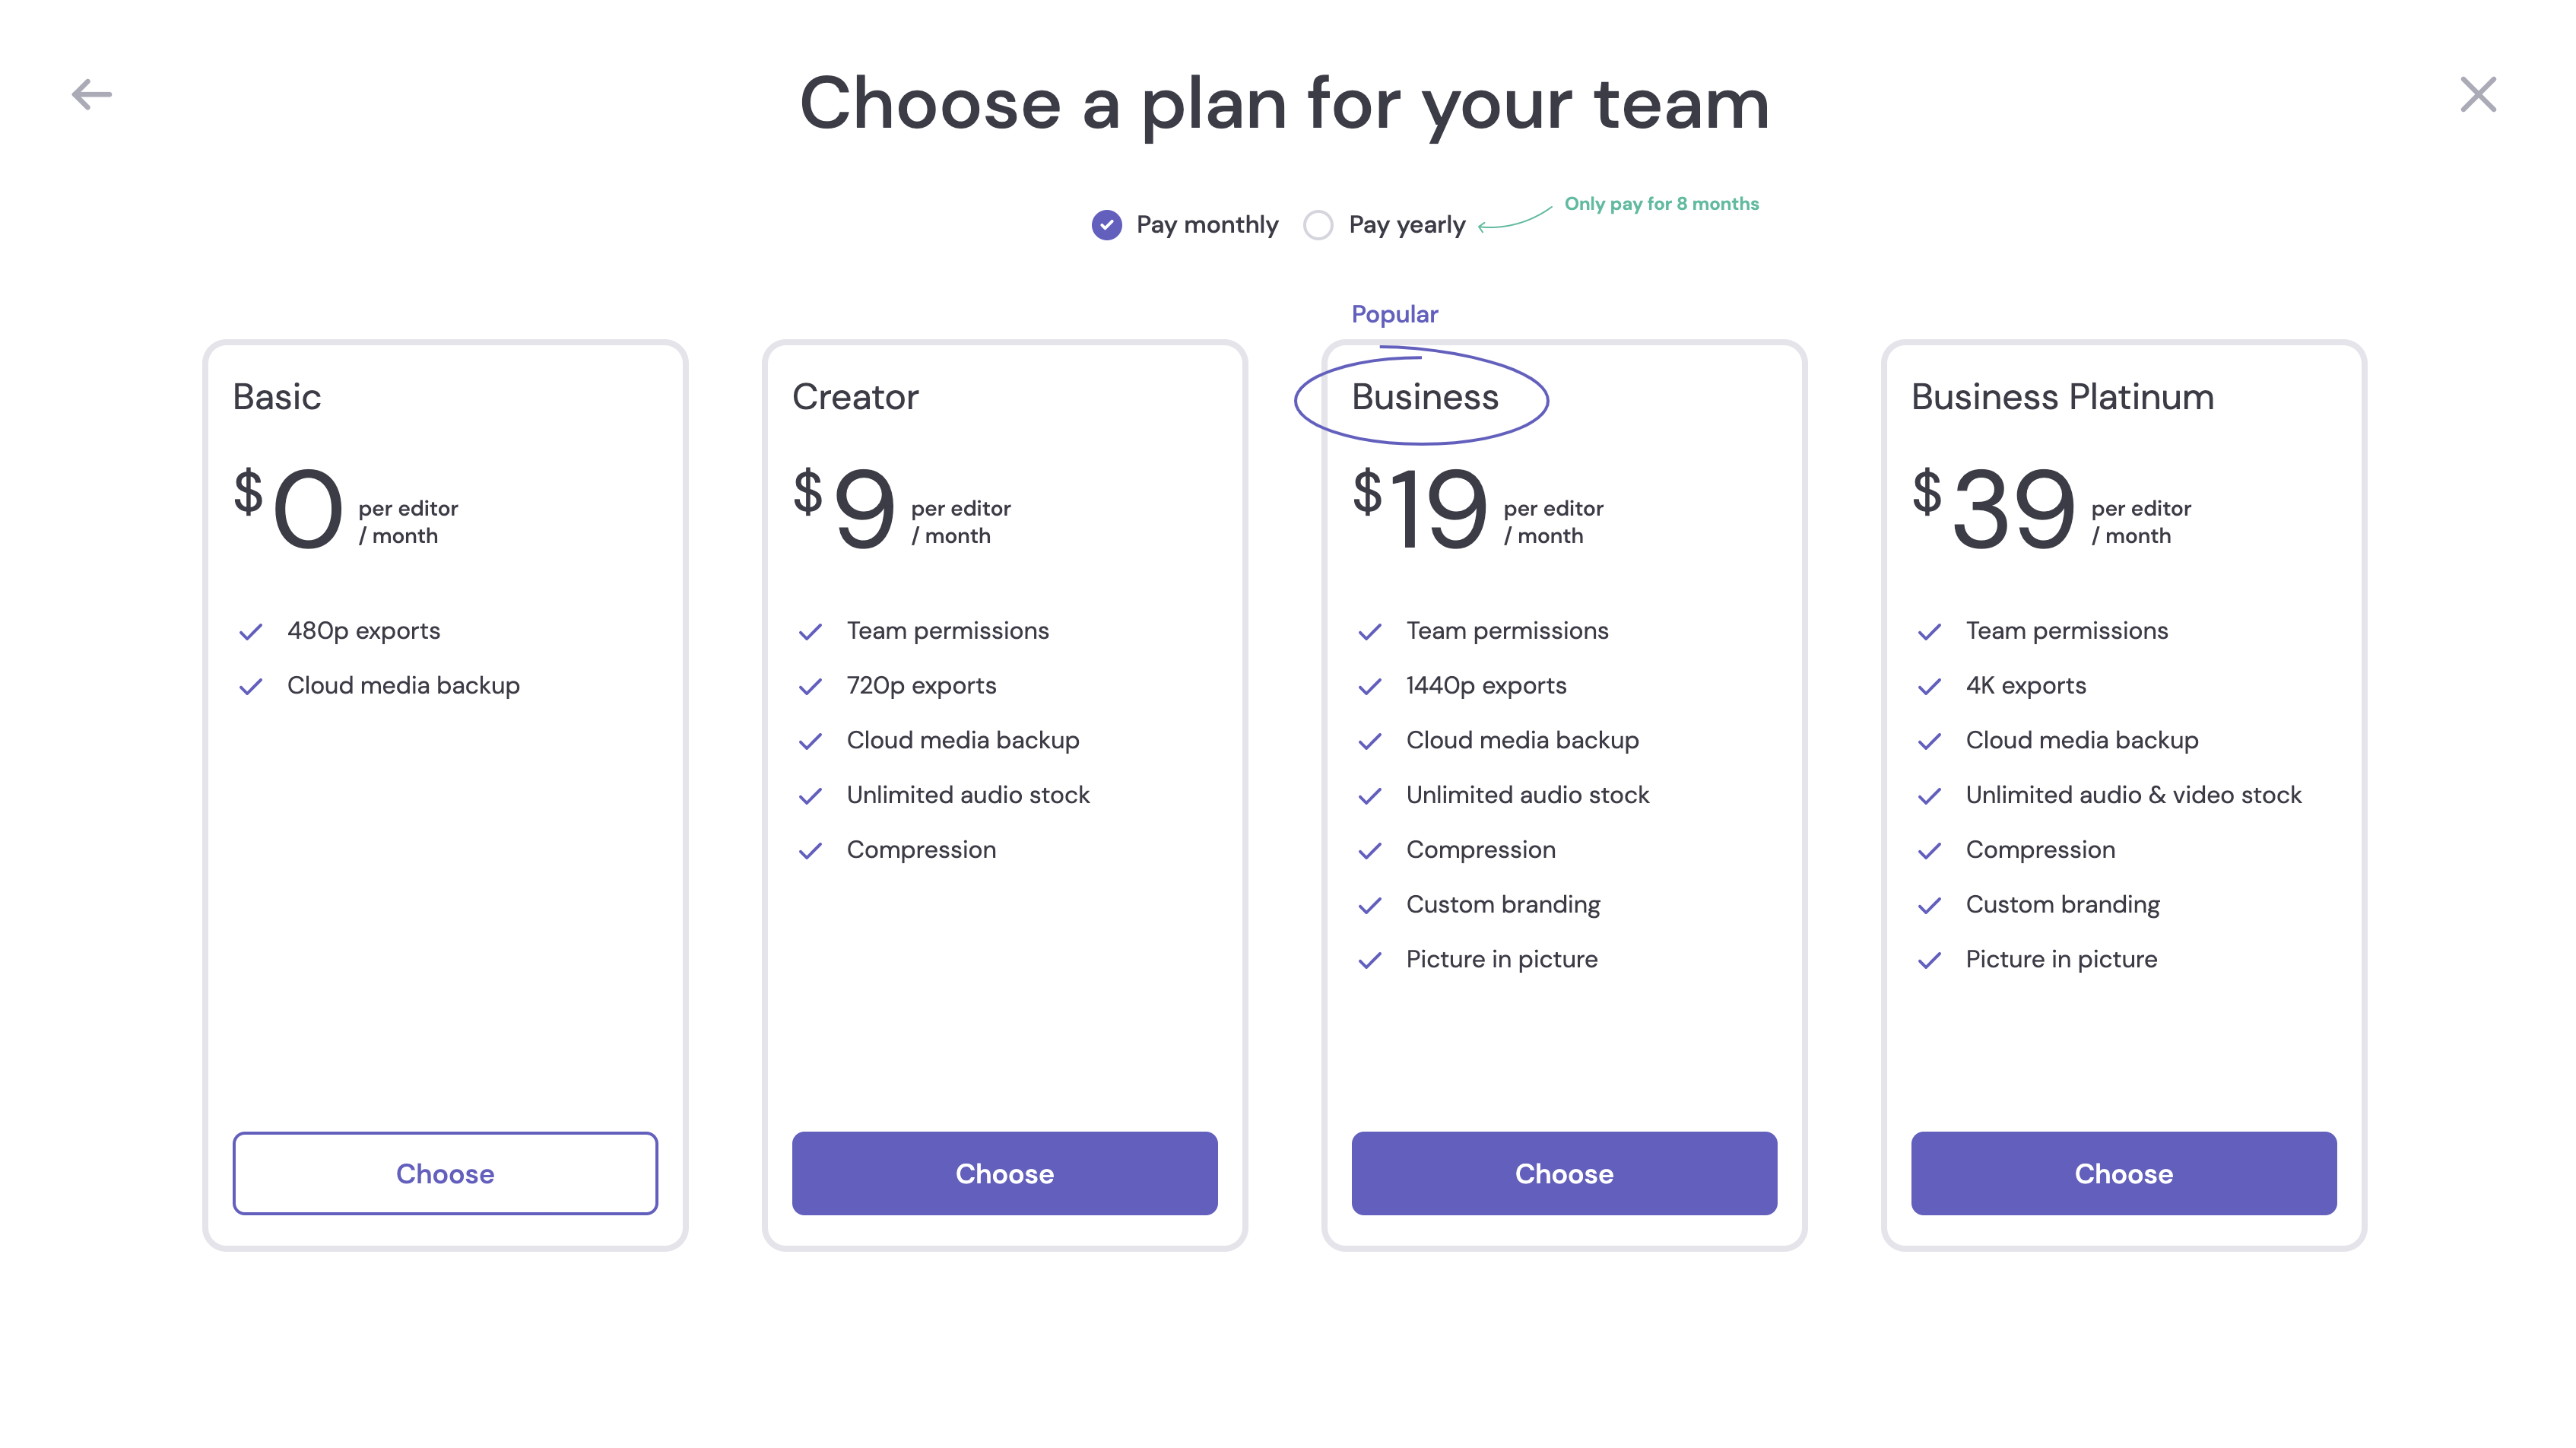 Team plans pricing (per editor, per month). Basic $0. Creator $9. Business $19. Business Platinum $39.